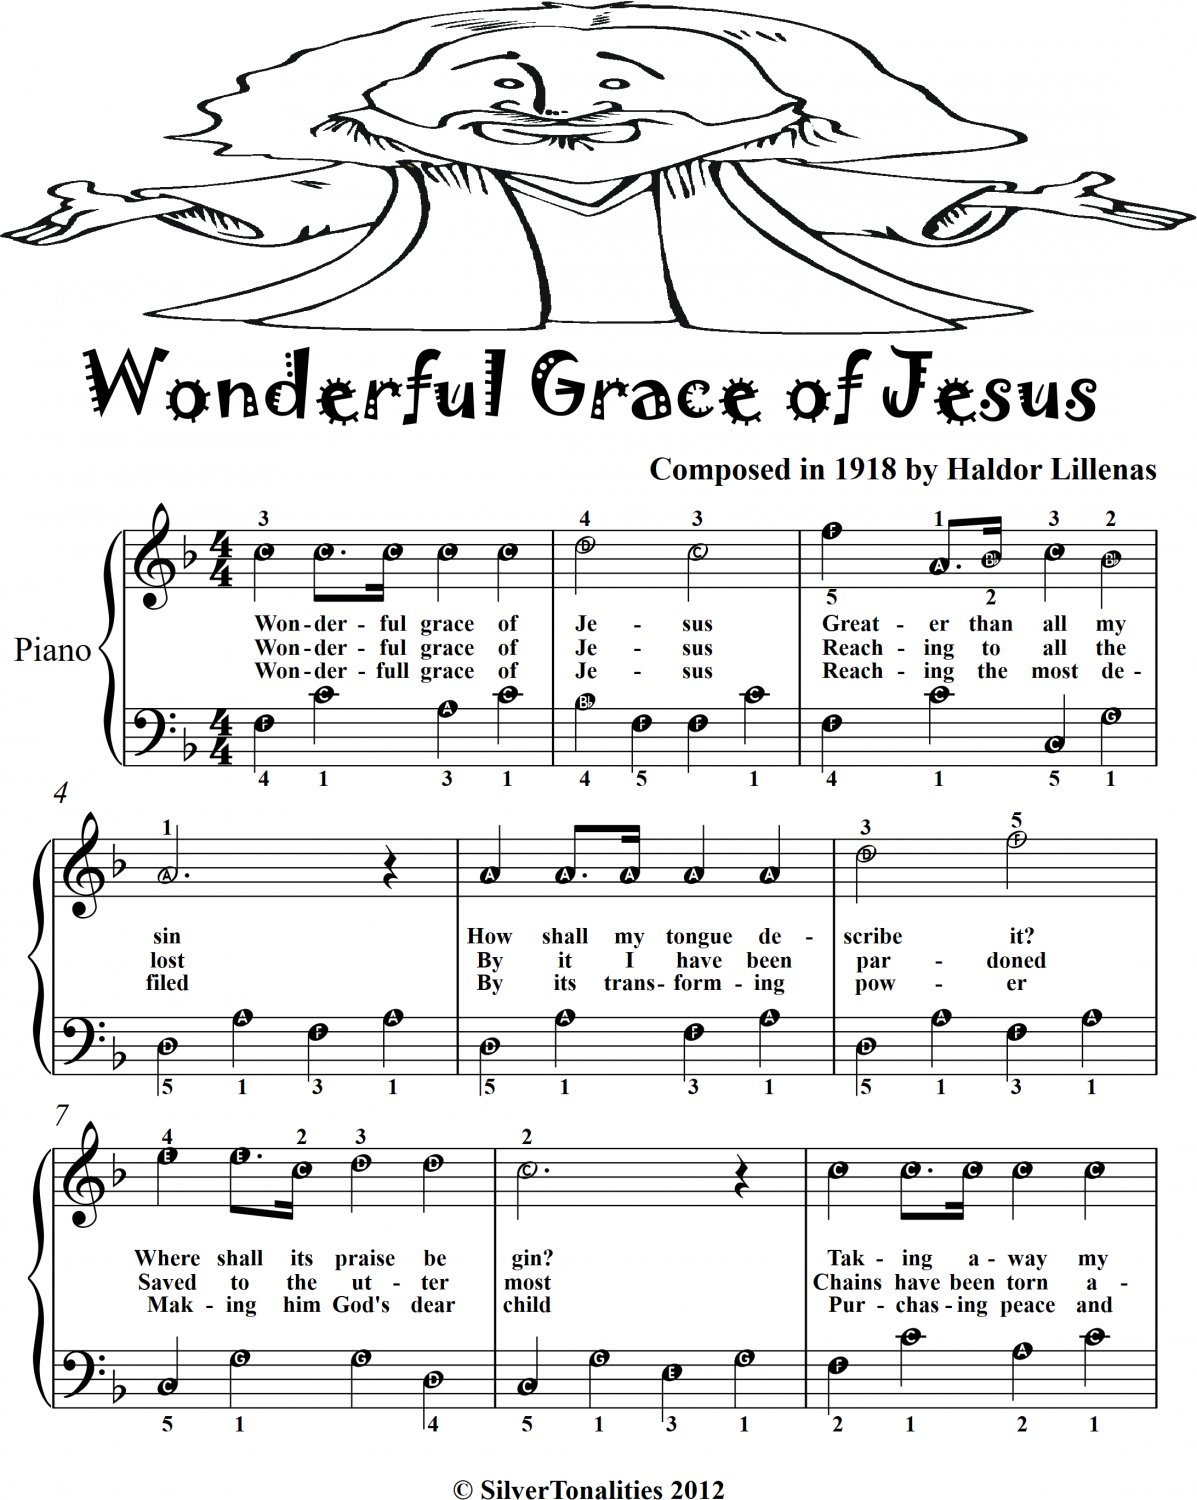 Wonderful Grace of Jesus Easy Piano Sheet Music 2nd Edition